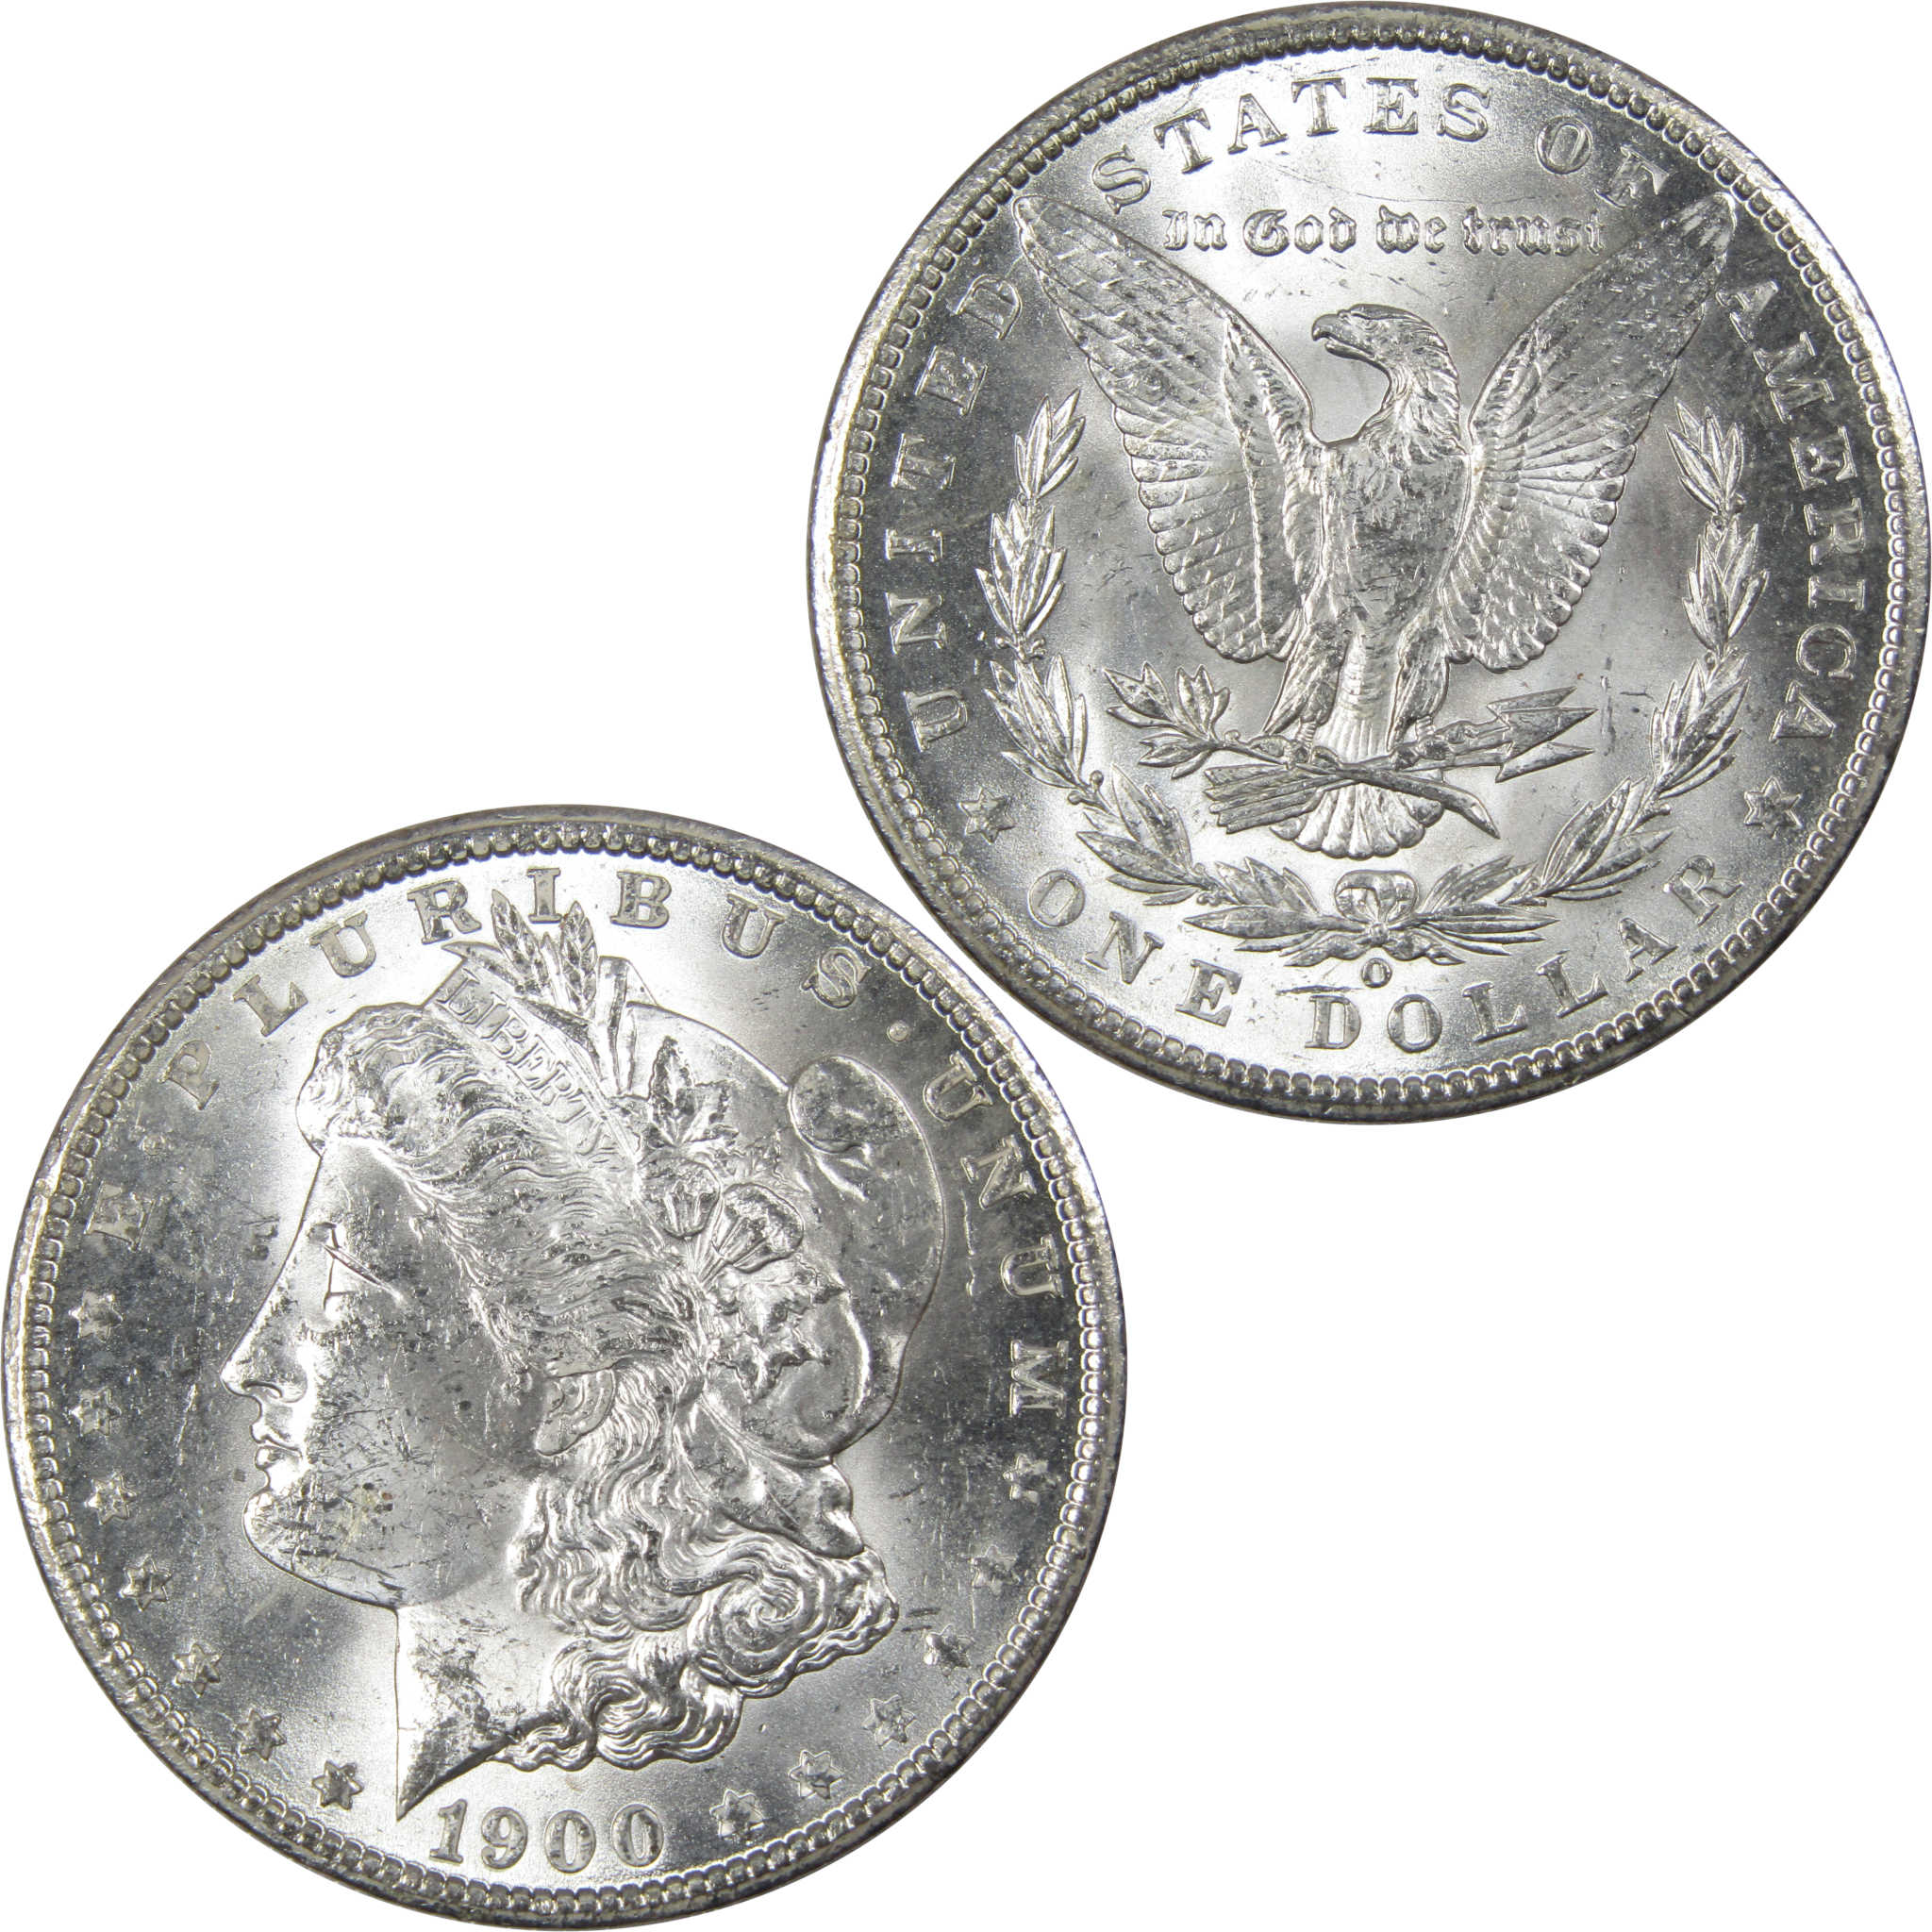 1900 O Morgan Dollar BU Uncirculated Mint State 90% Silver SKU:IPC9750 - Morgan coin - Morgan silver dollar - Morgan silver dollar for sale - Profile Coins &amp; Collectibles